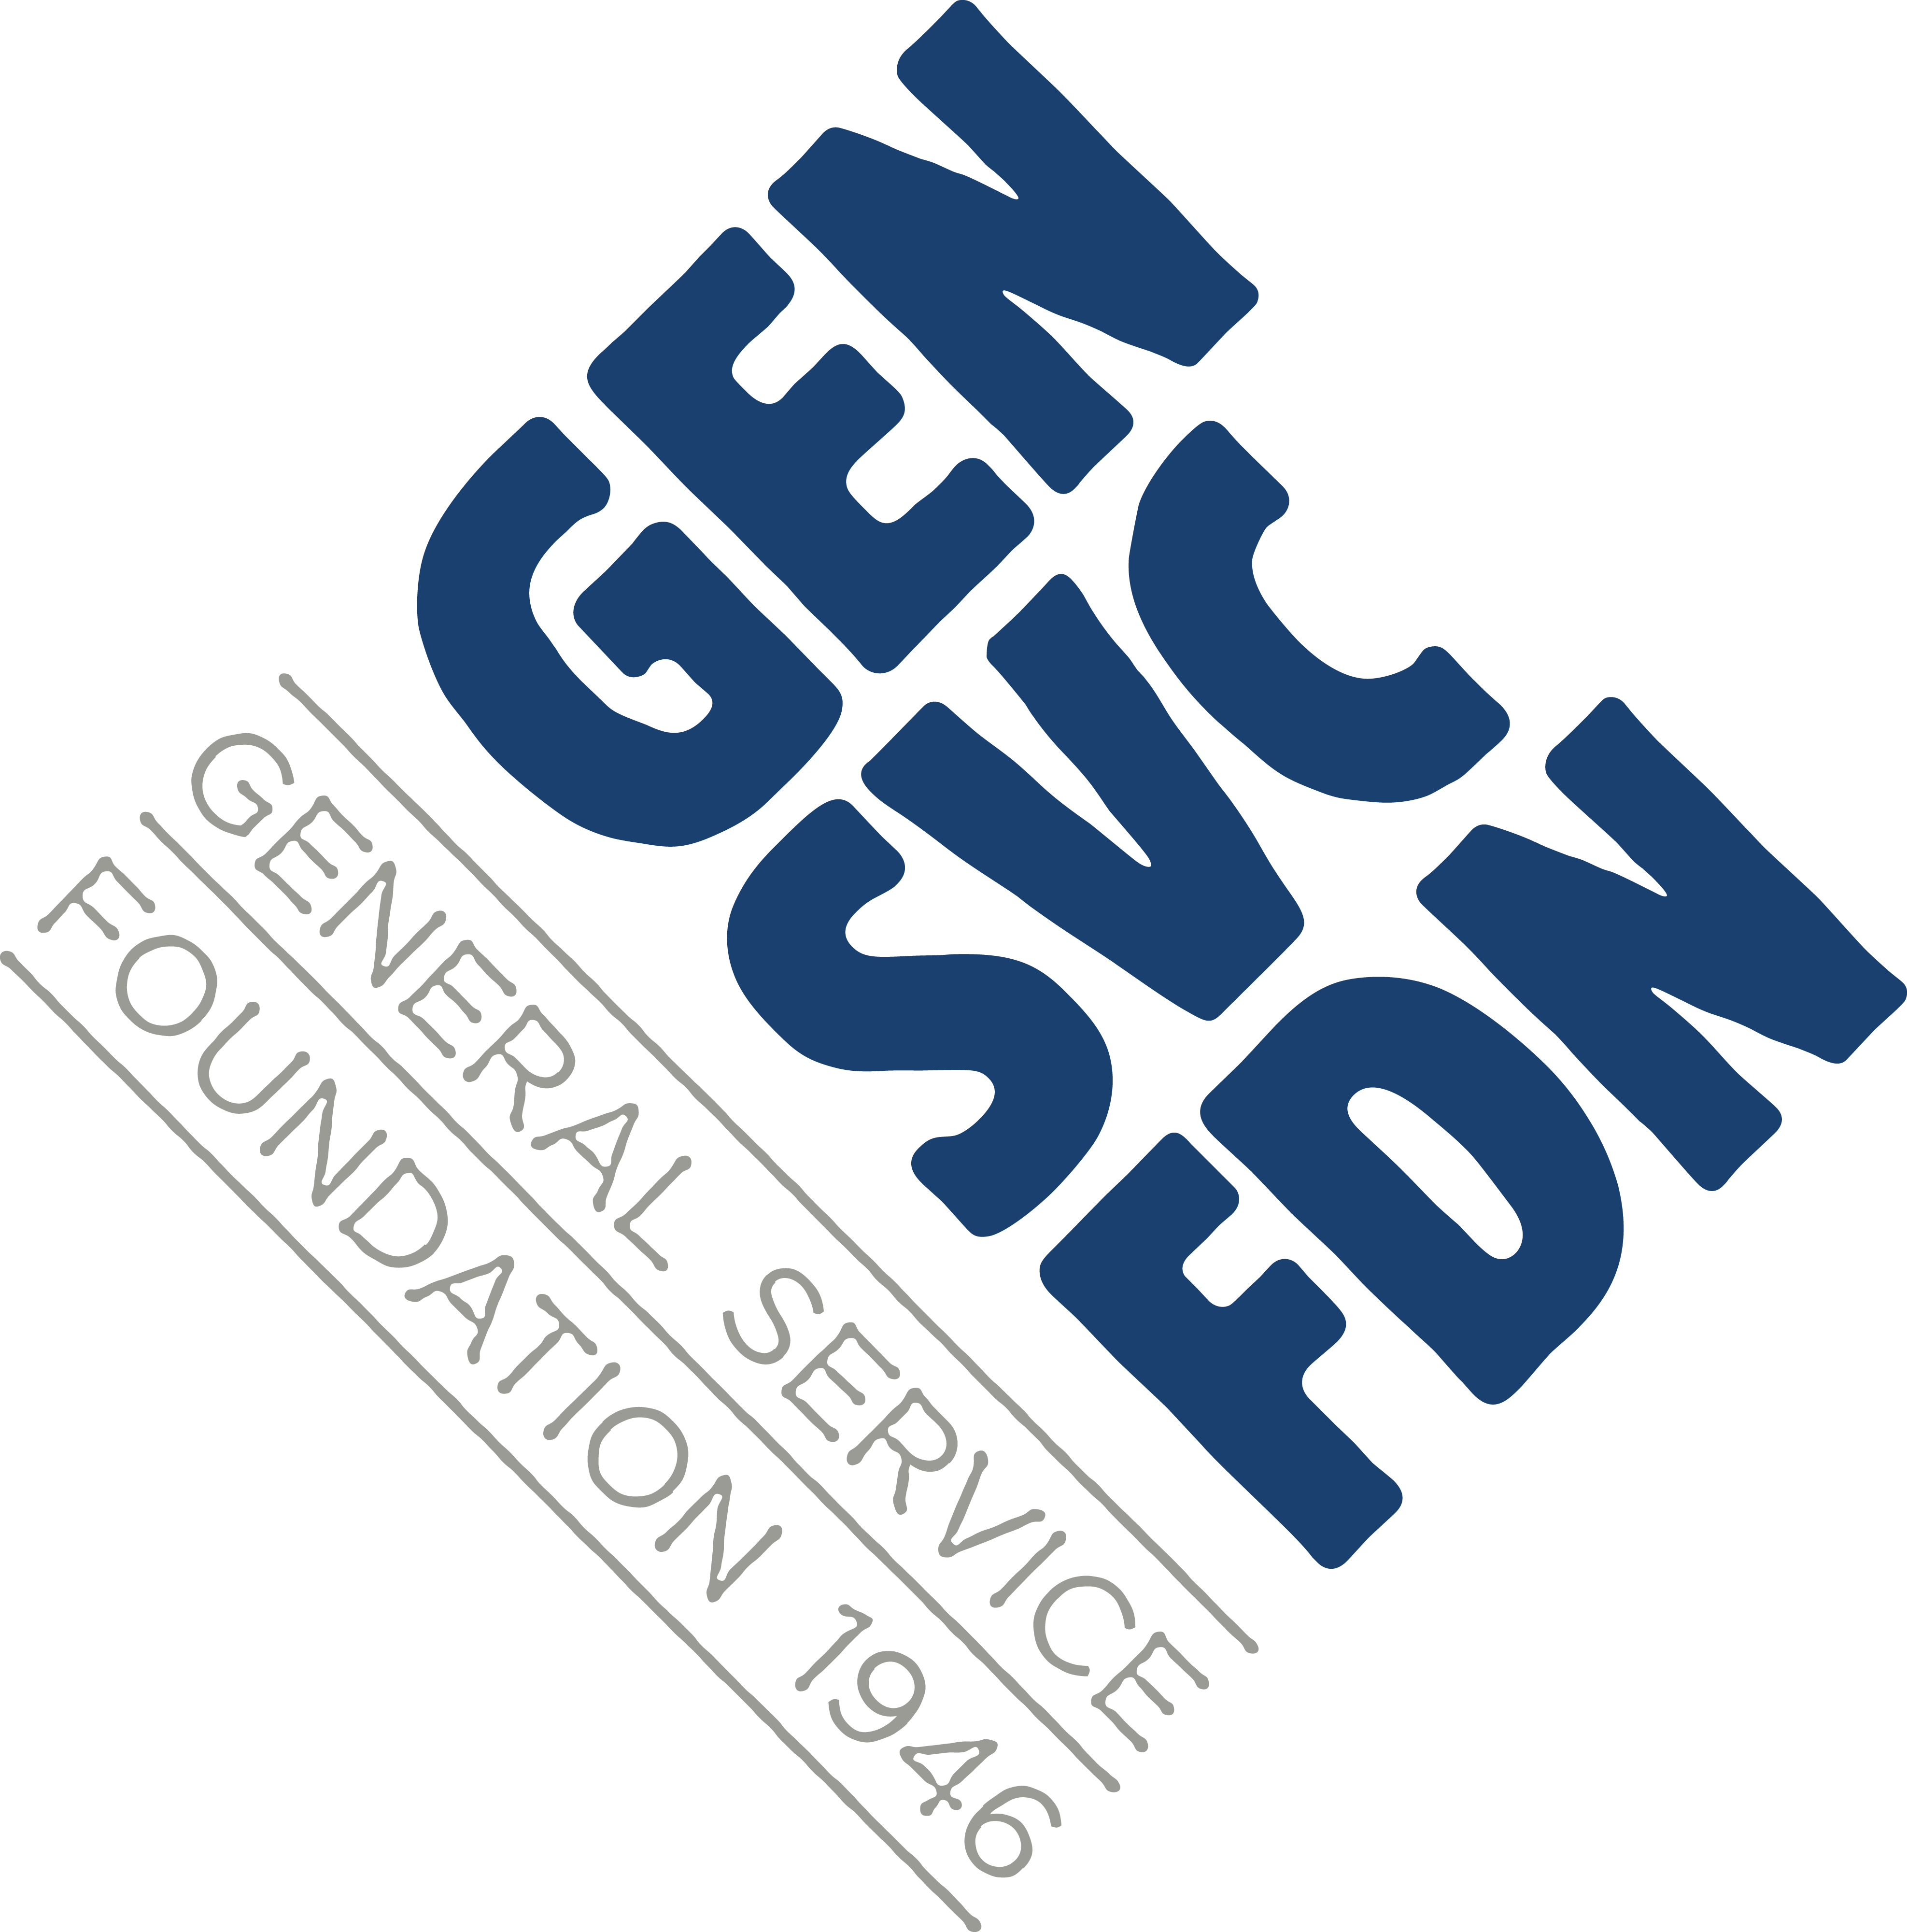 General Service Foundation logo